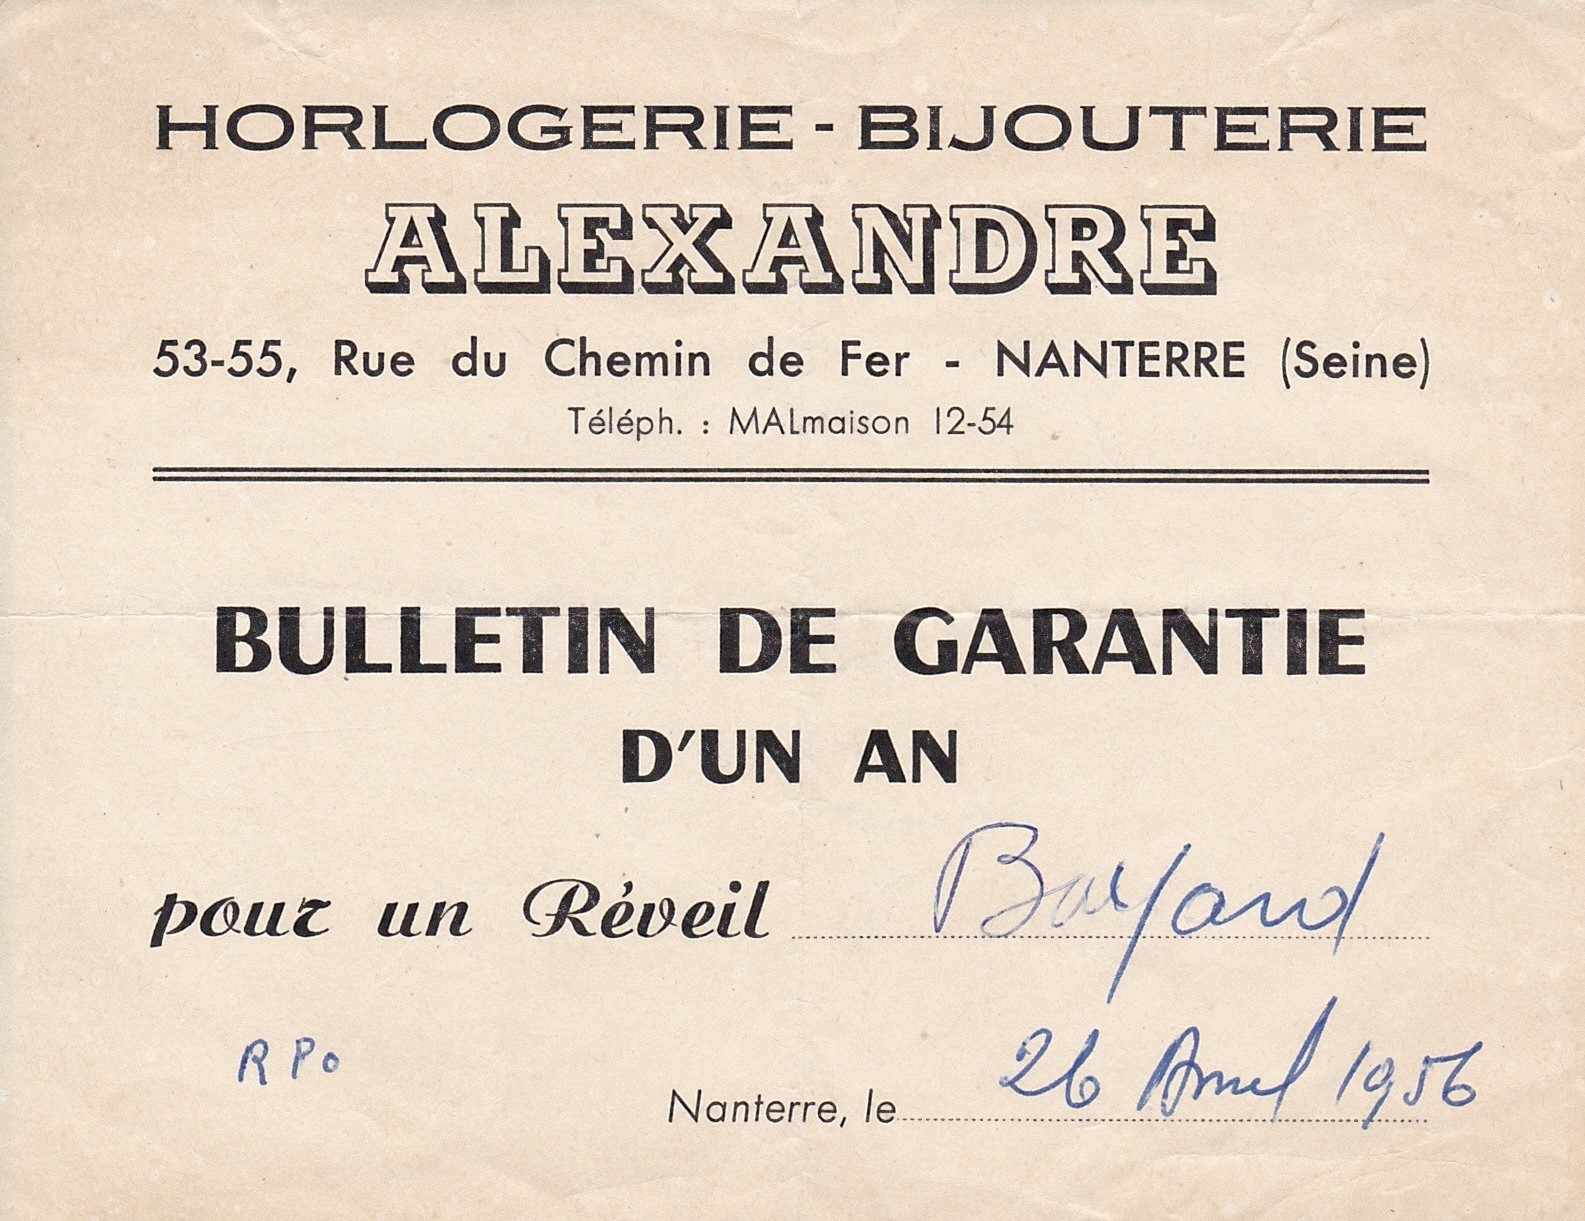 Horlogerie-bijouterie, Alexande, rue du Chemin-de-Fer, 1956